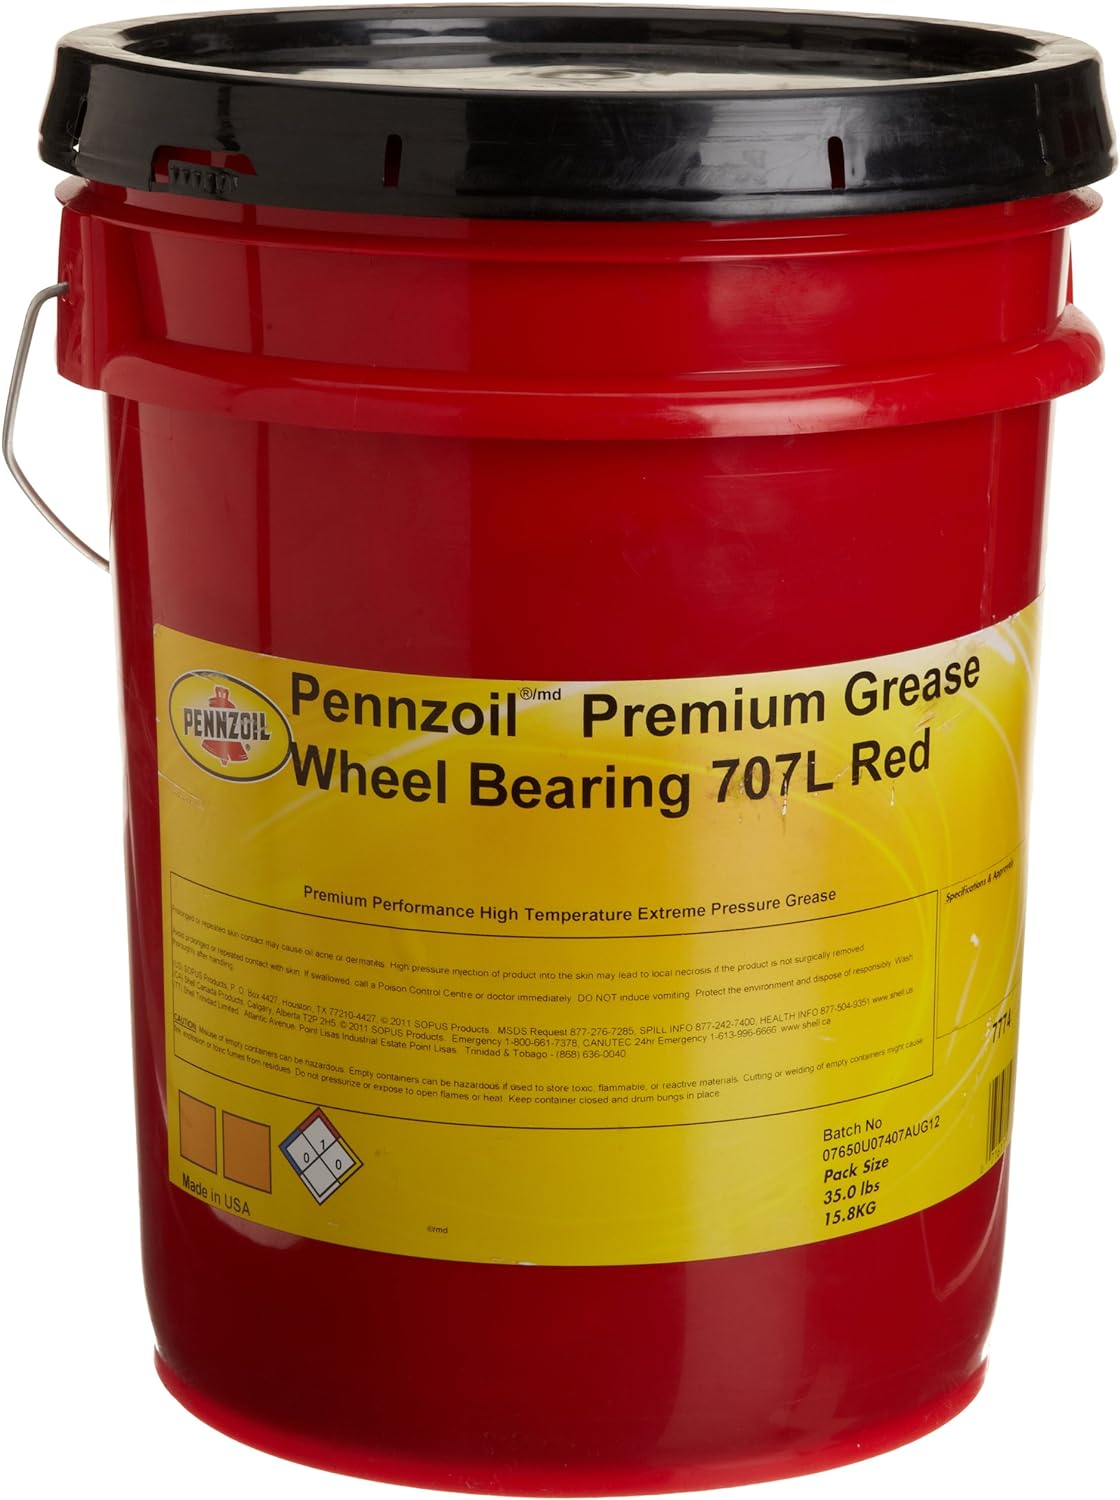 Car Oil | Car Fluids - Kmart Pennzoil Premium Wheel Bearing Grease 707l